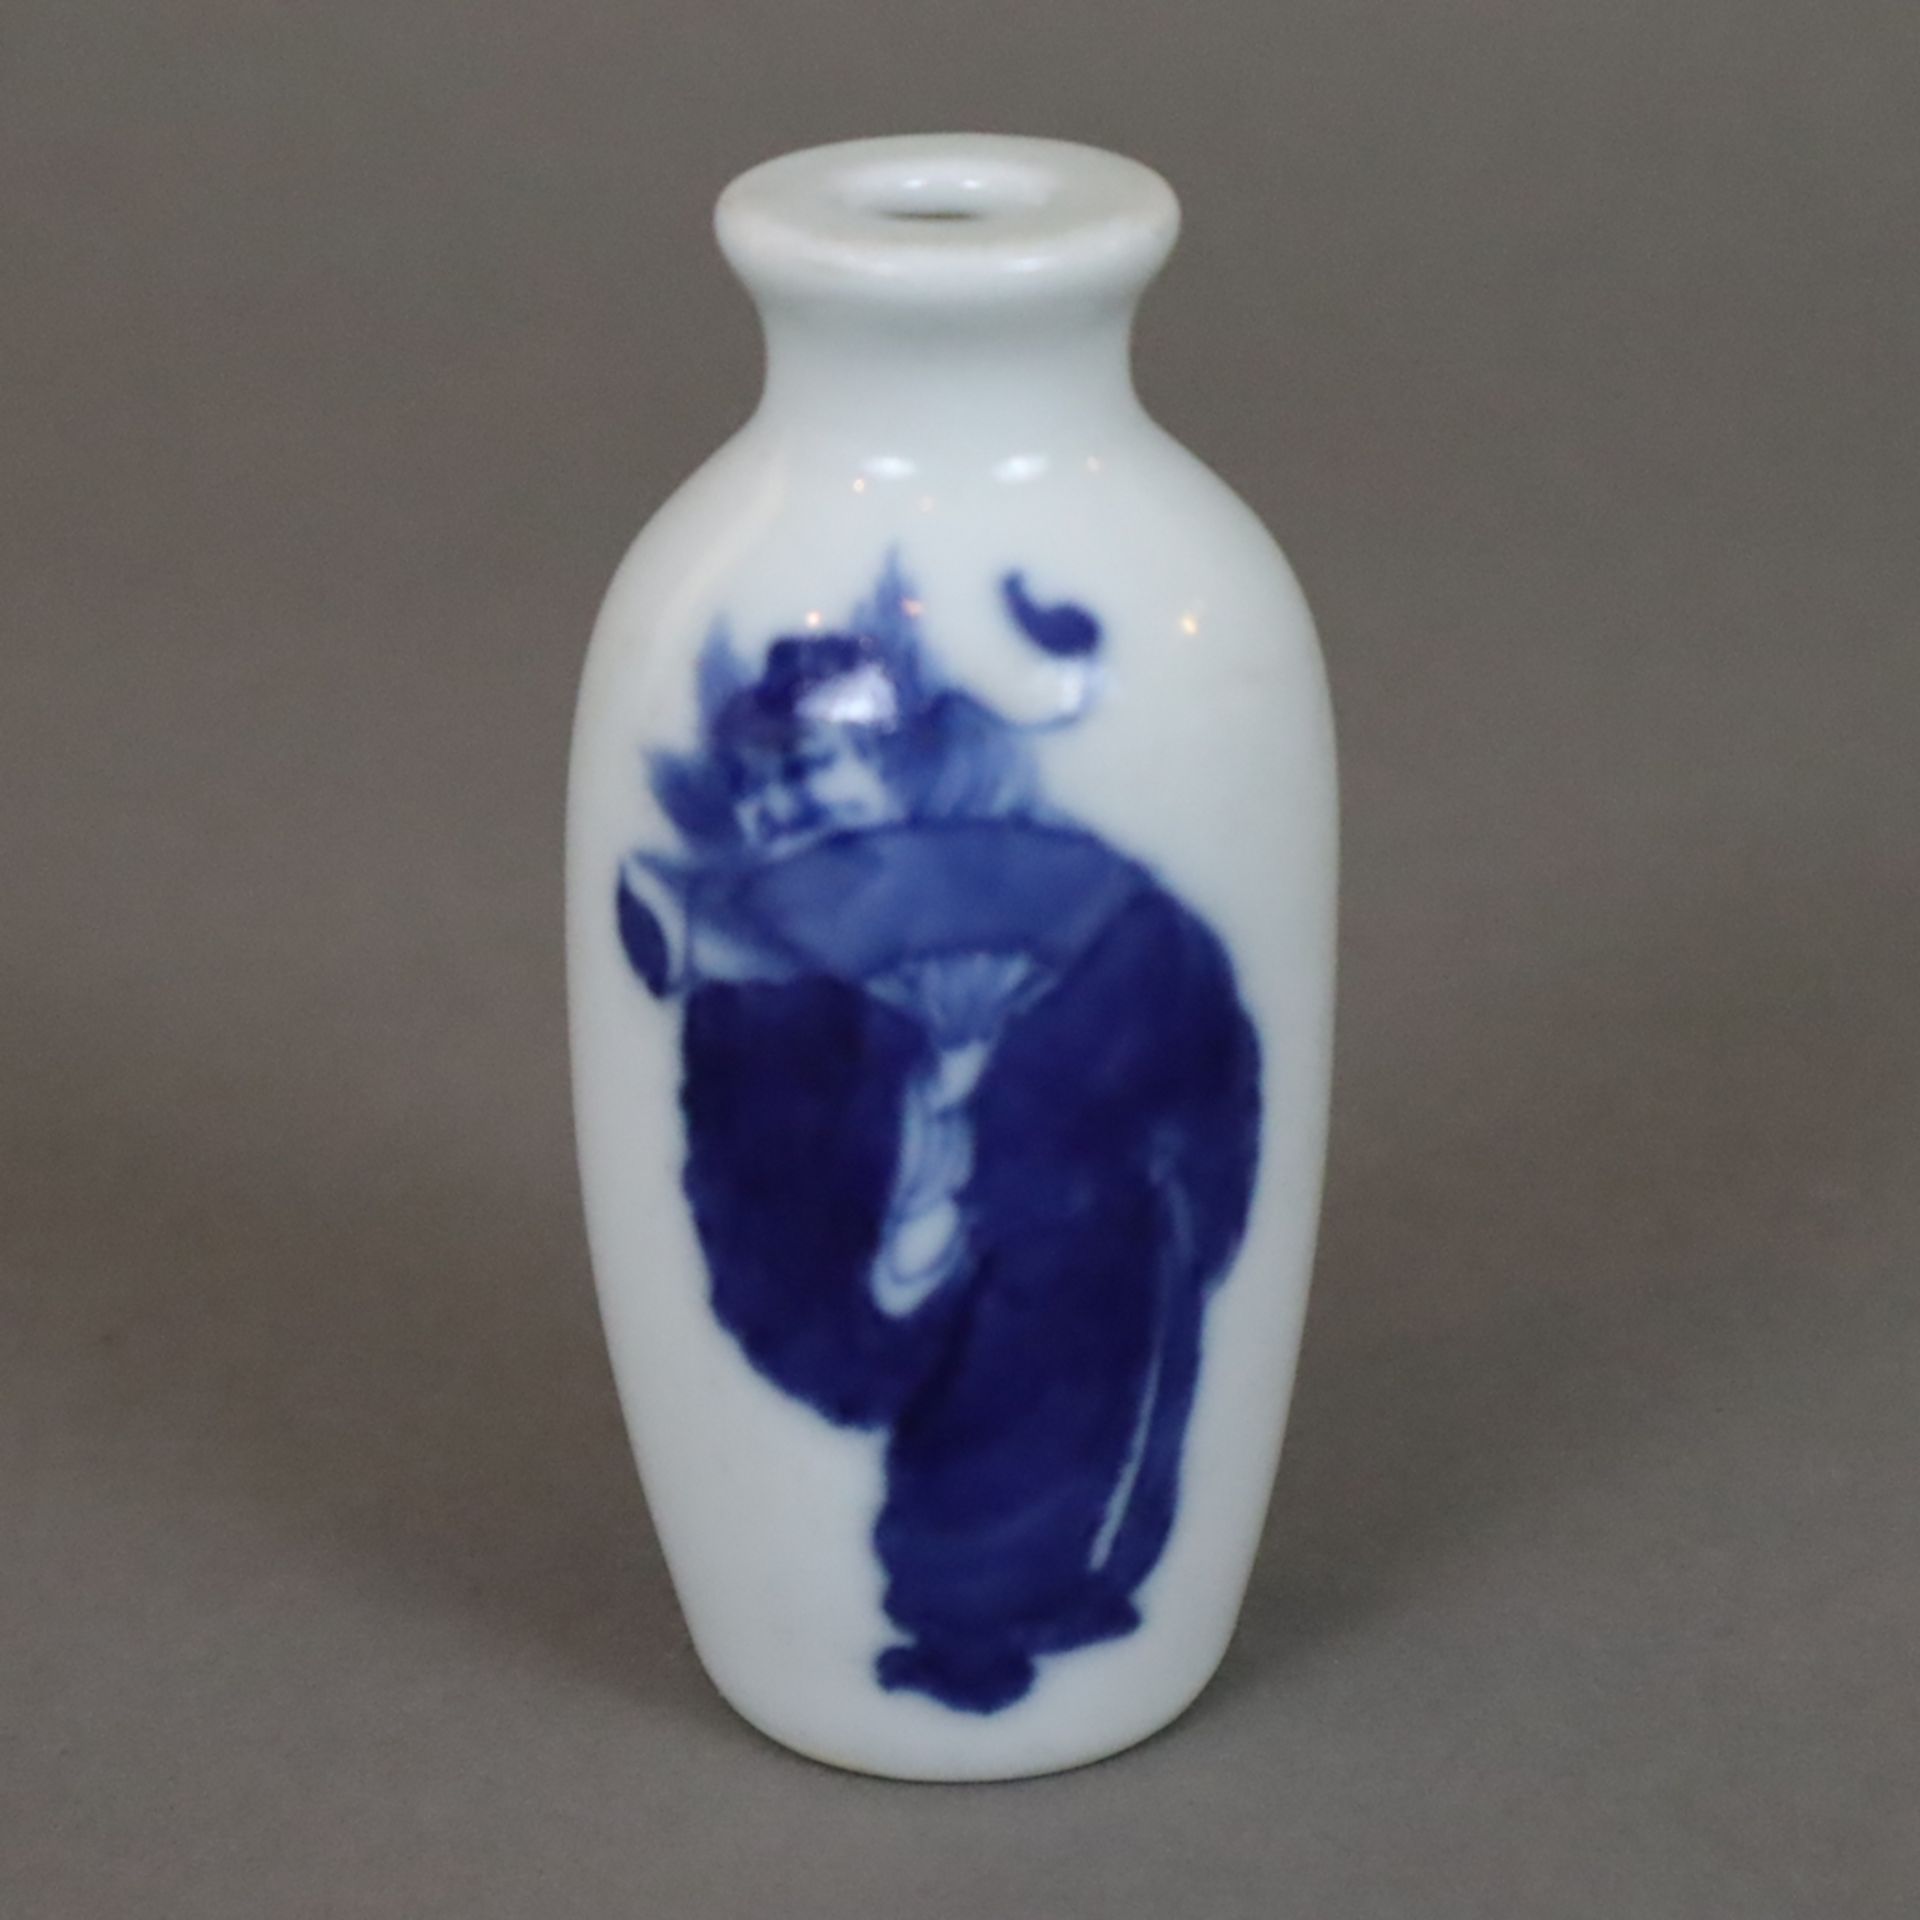 Snuffbottle - Porzellan in Unterglasurblau bemalt mit Dämonen-Bezwinger Zhong Kui, im Boden "Qianlo - Image 3 of 6